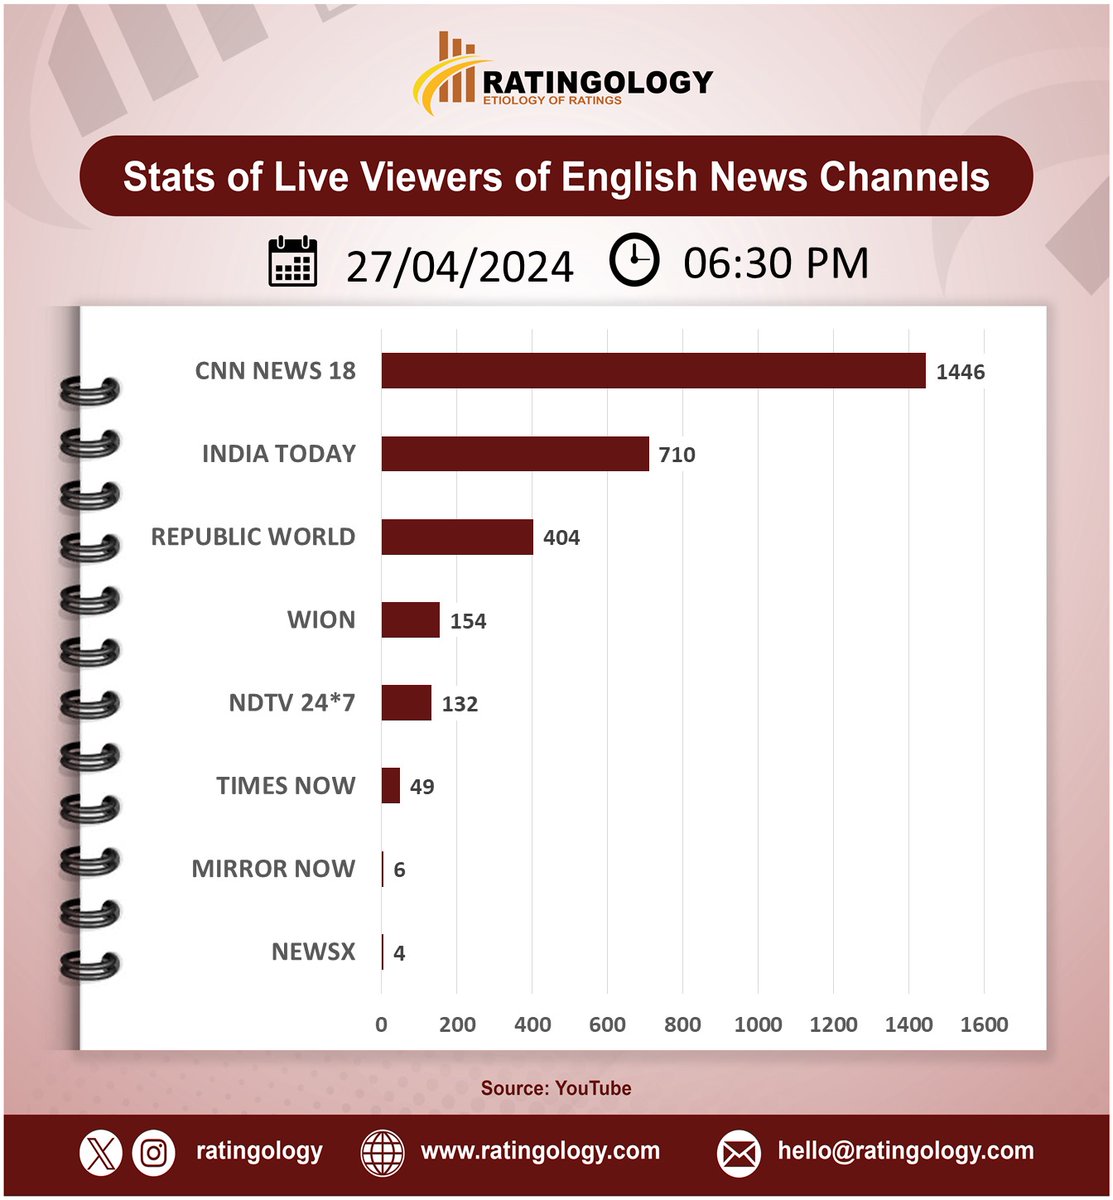 𝐒𝐭𝐚𝐭𝐬 𝐨𝐟 𝐥𝐢𝐯𝐞 𝐯𝐢𝐞𝐰𝐞𝐫𝐬 𝐨𝐧 #Youtube of #EnglishMedia #channelsat 06:30pm, Date: 27/April/2024 #Ratingology #Mediastats #RatingsKaBaap #DataScience #IndiaToday #Wion #RepublicTV #CNNNews18 #TimesNow #NewsX #NDTV24x7 #MirrorNow